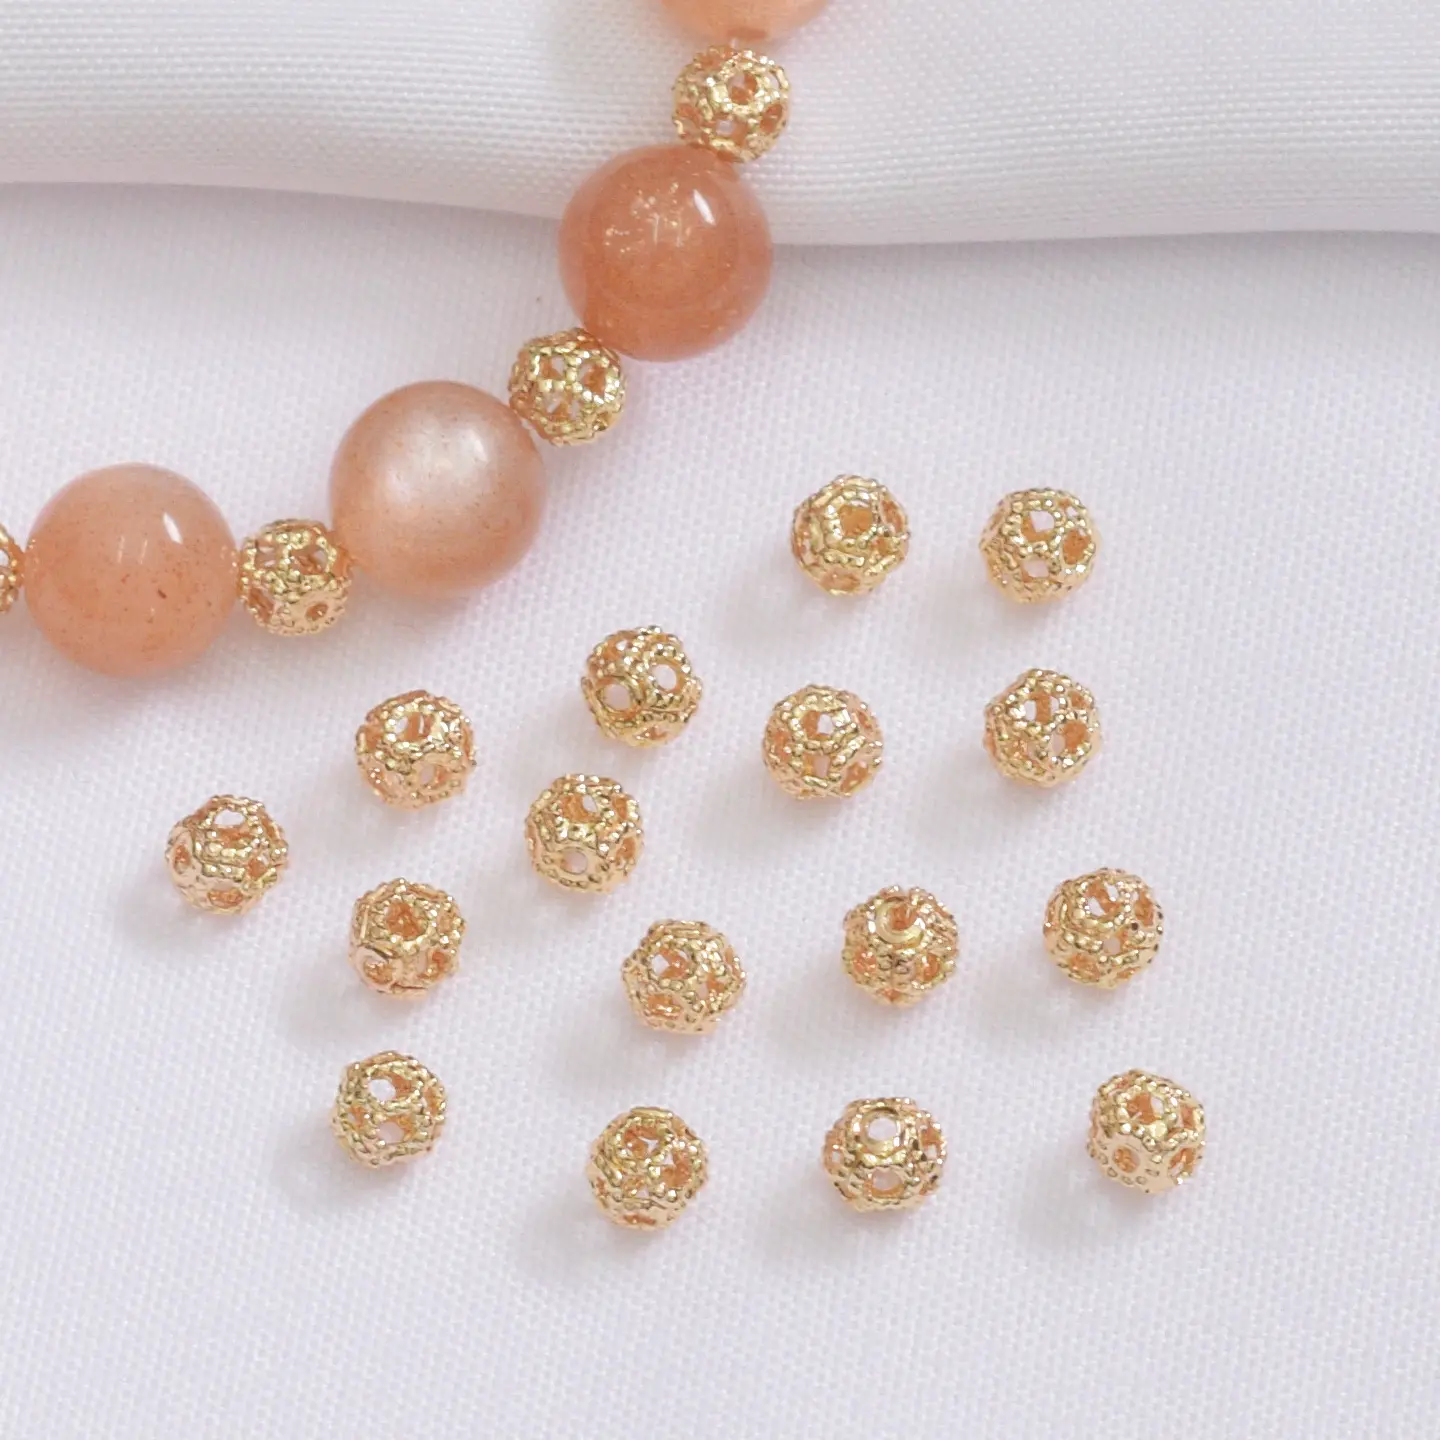 Atacado de alta qualidade joias femininas DIY moda colar acessórios ouro delicado contas redondas espaçadores de cobre ocos